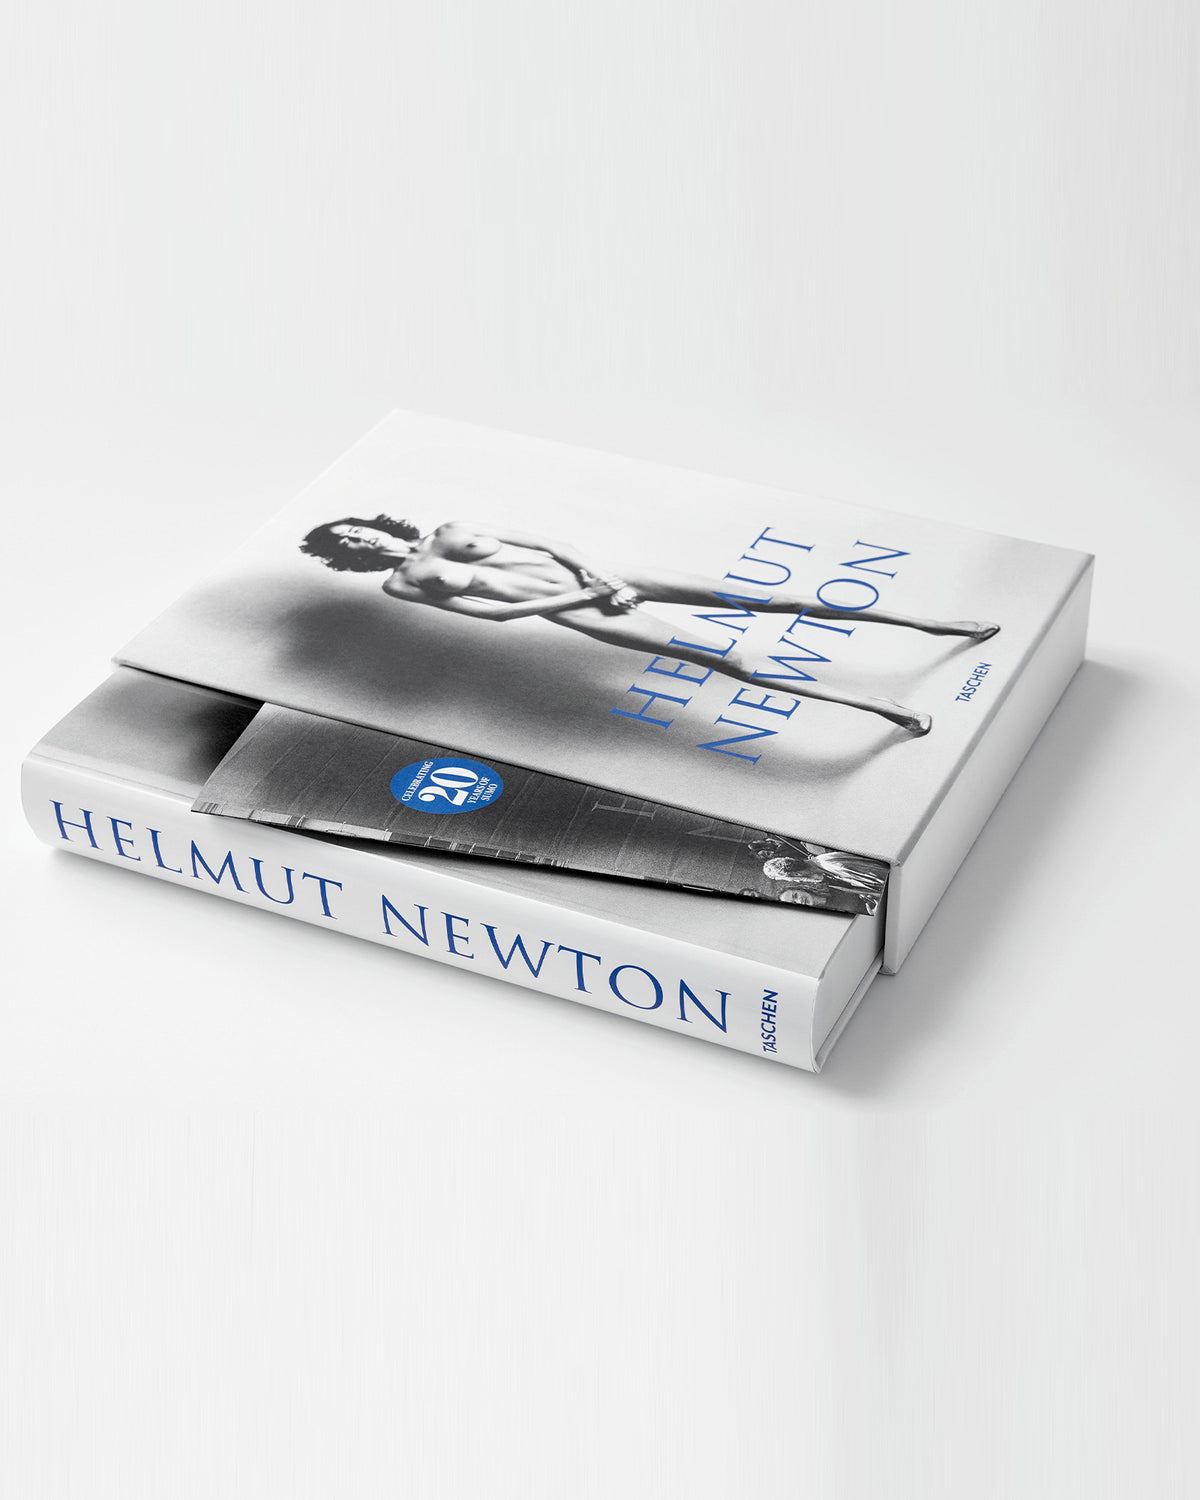 Helmut Newton. SUMO. 20Th Anniversary Edition